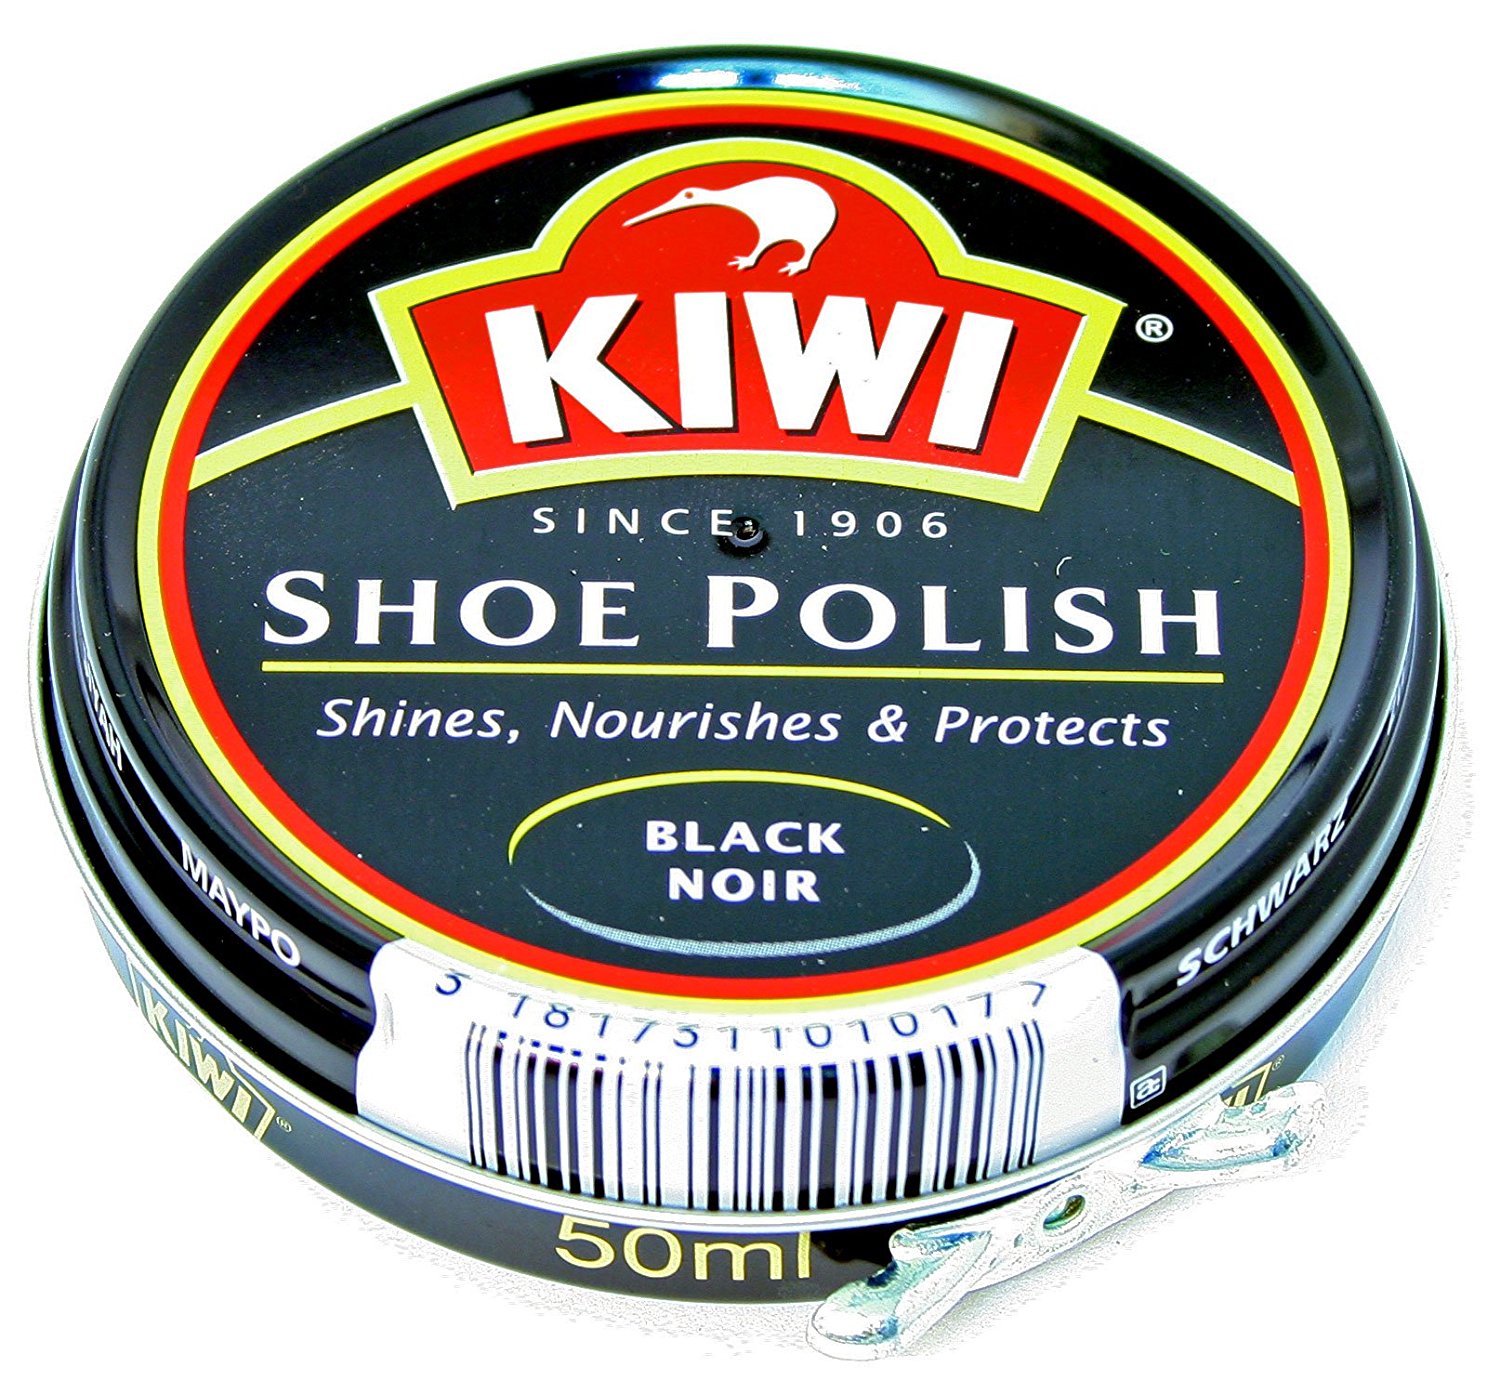 Kiwi Shoe Polish - Ben Lido